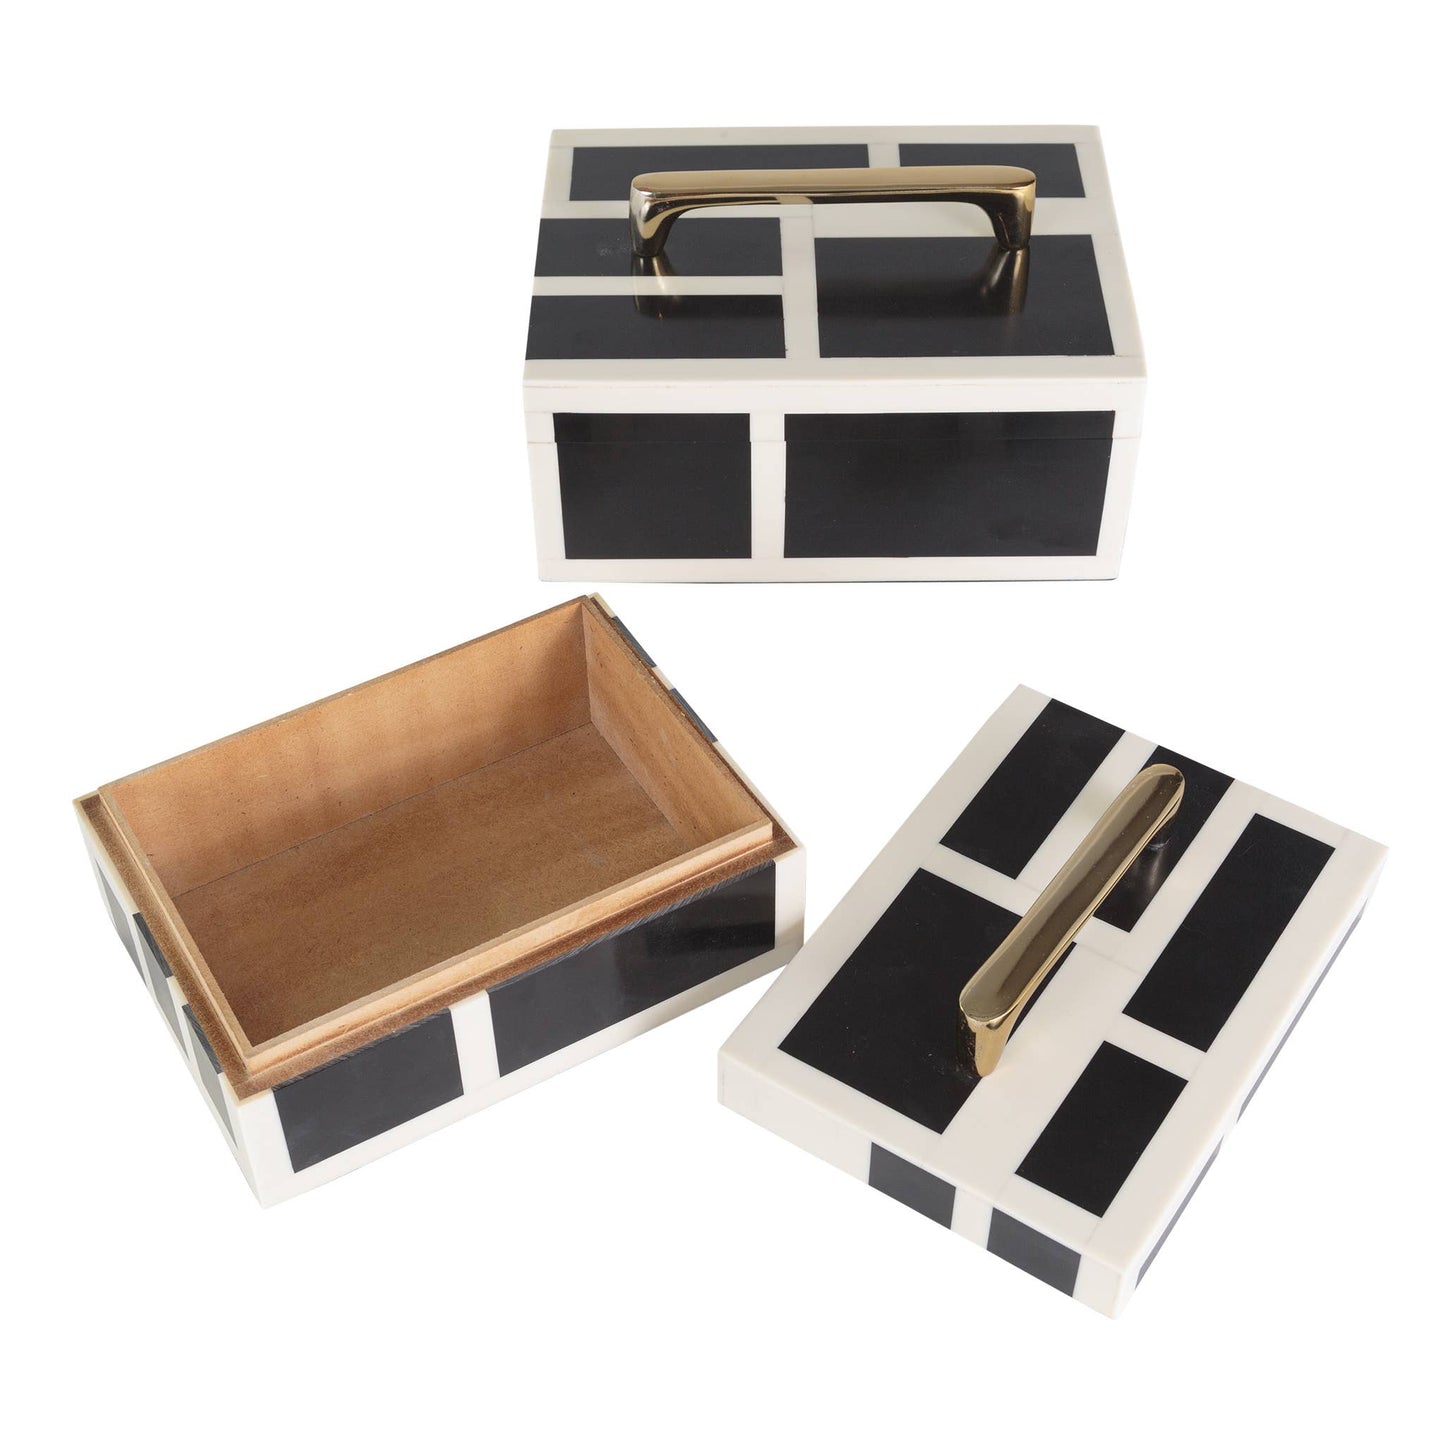 Kasai Black and White Boxes -Set 2